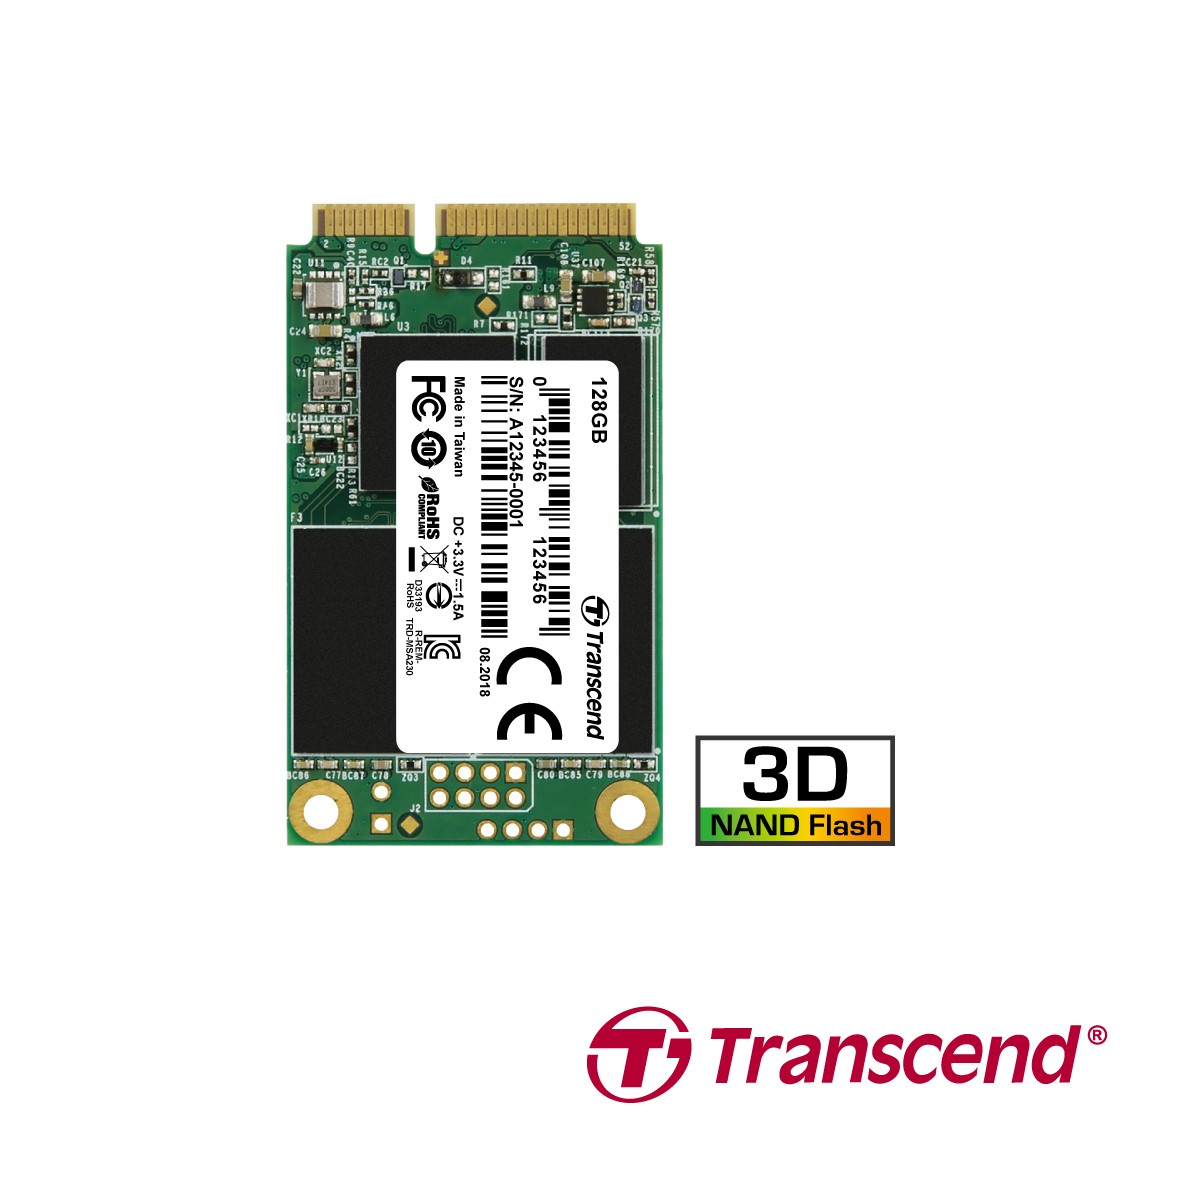 Transcend Brings 3D NAND to mSATA SSD MSA230S